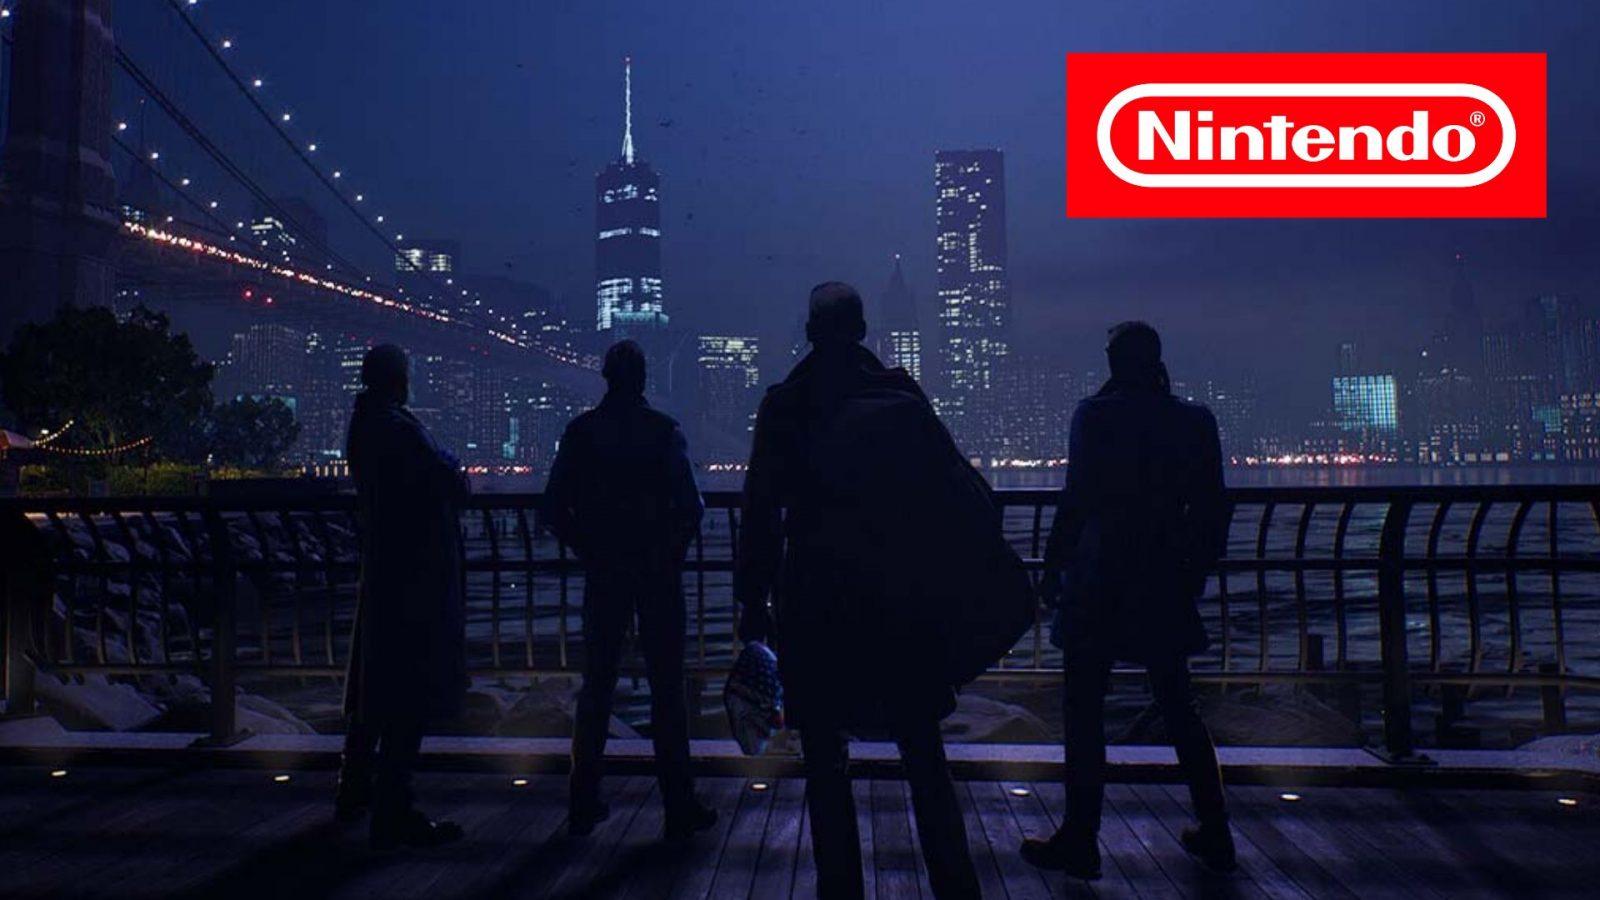 payday 3 characters stood at bridge with nintendo logo